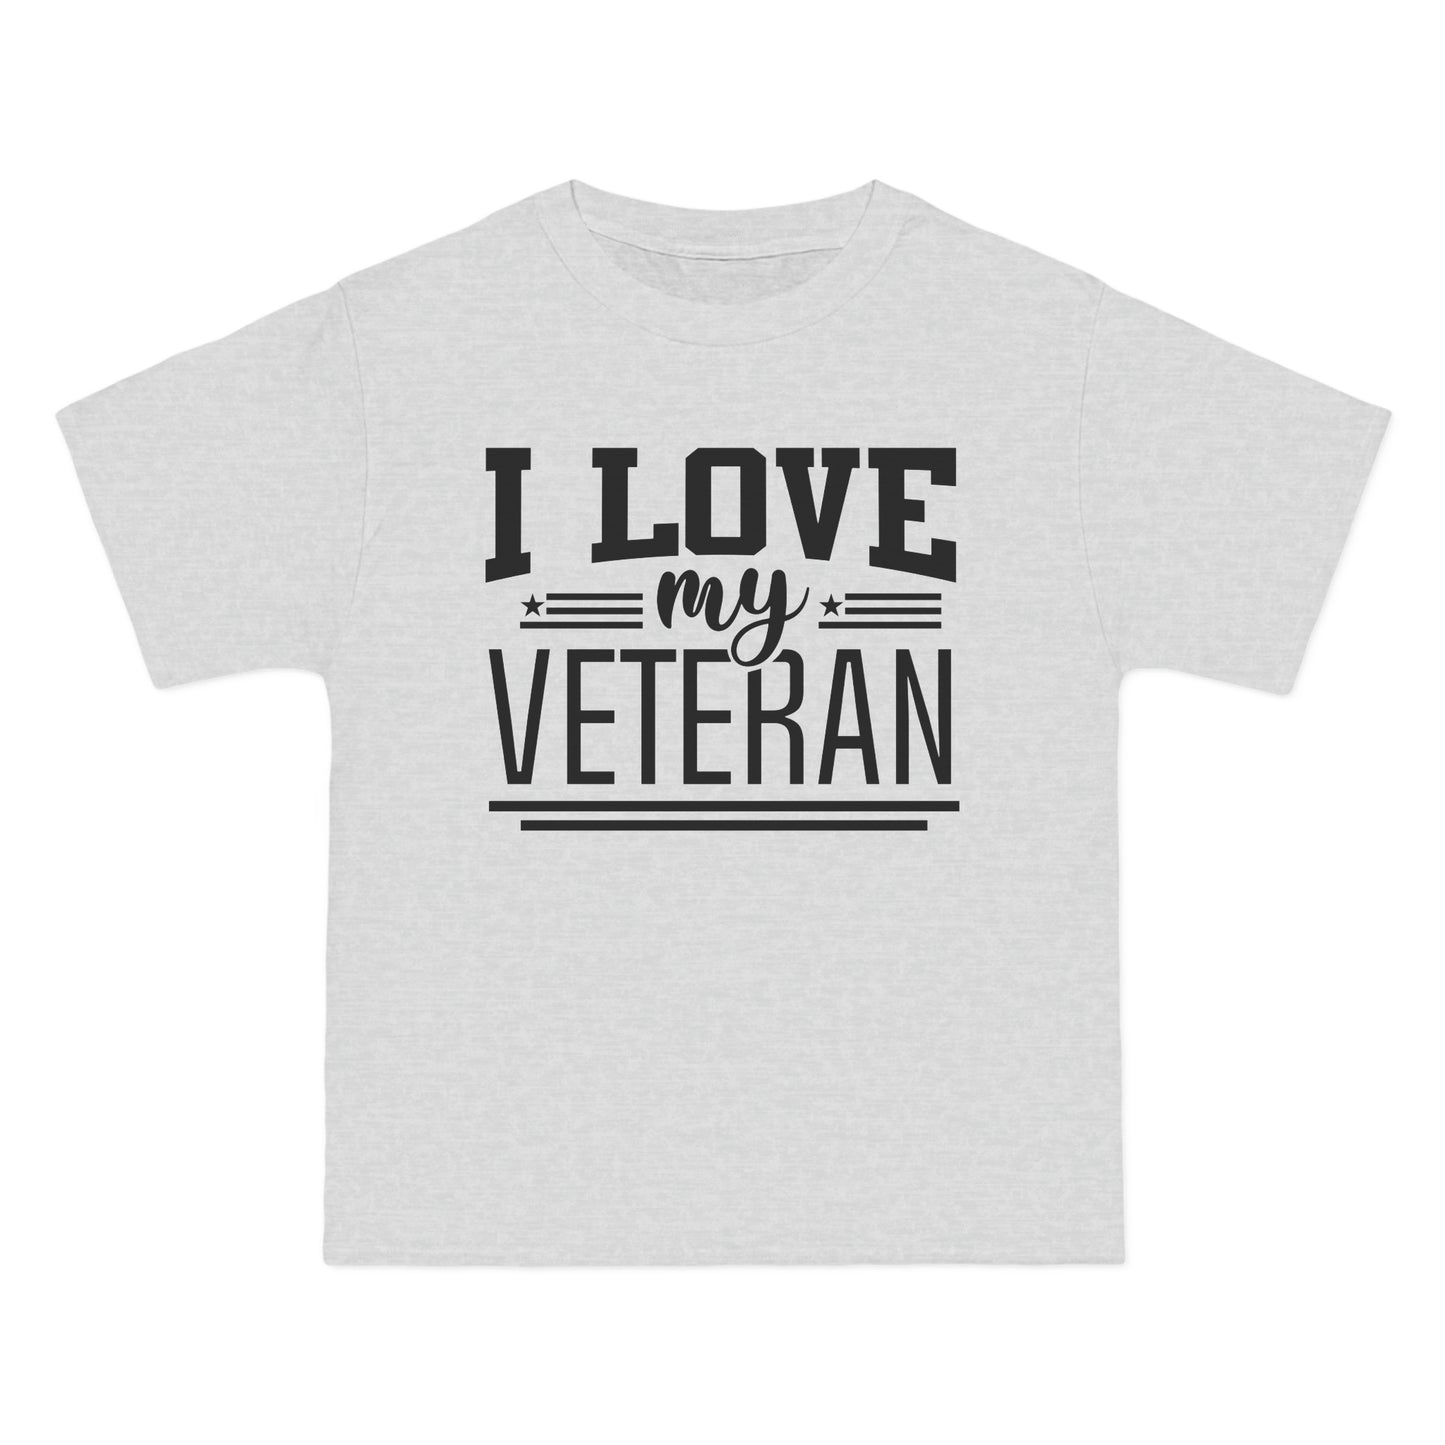 Beefy-T®  Short-Sleeve T-Shirt - I love my veteran